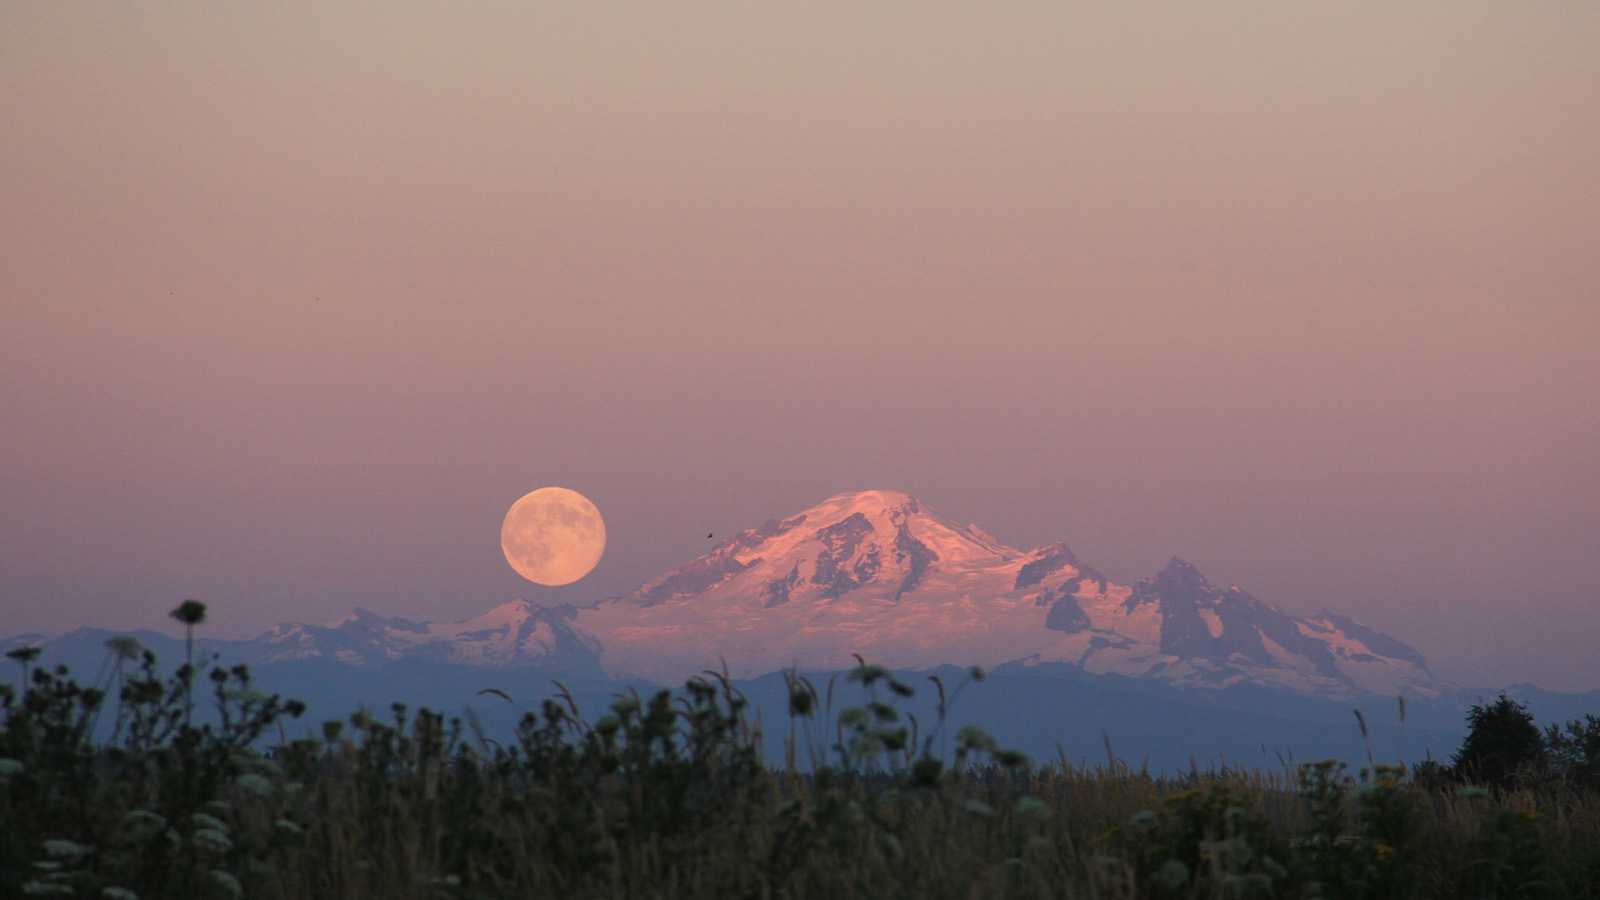 An orange moon above a mountain range